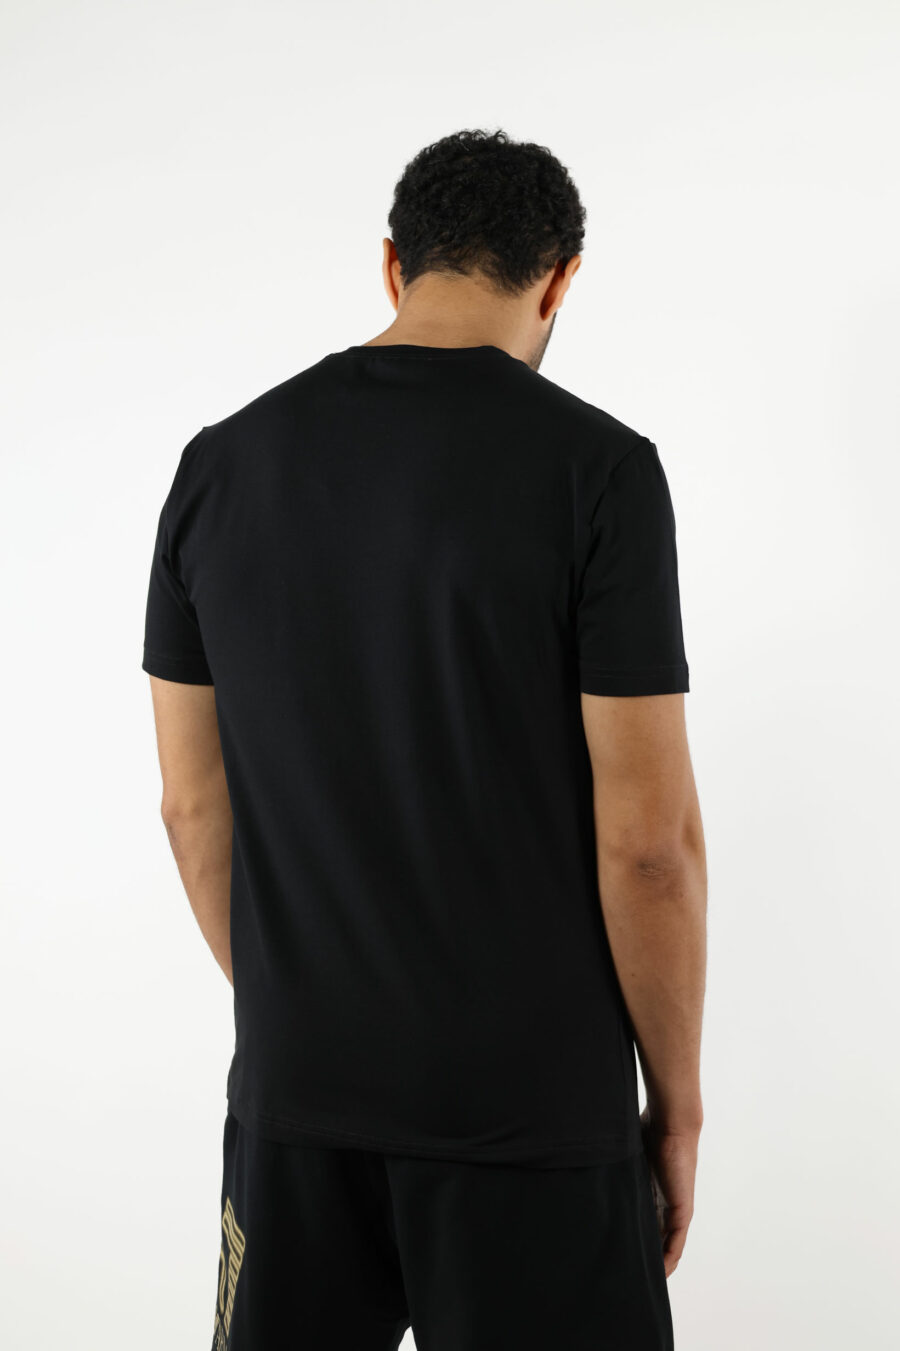 Camiseta negra con maxilogo "lux identity" dorado neón - 110904